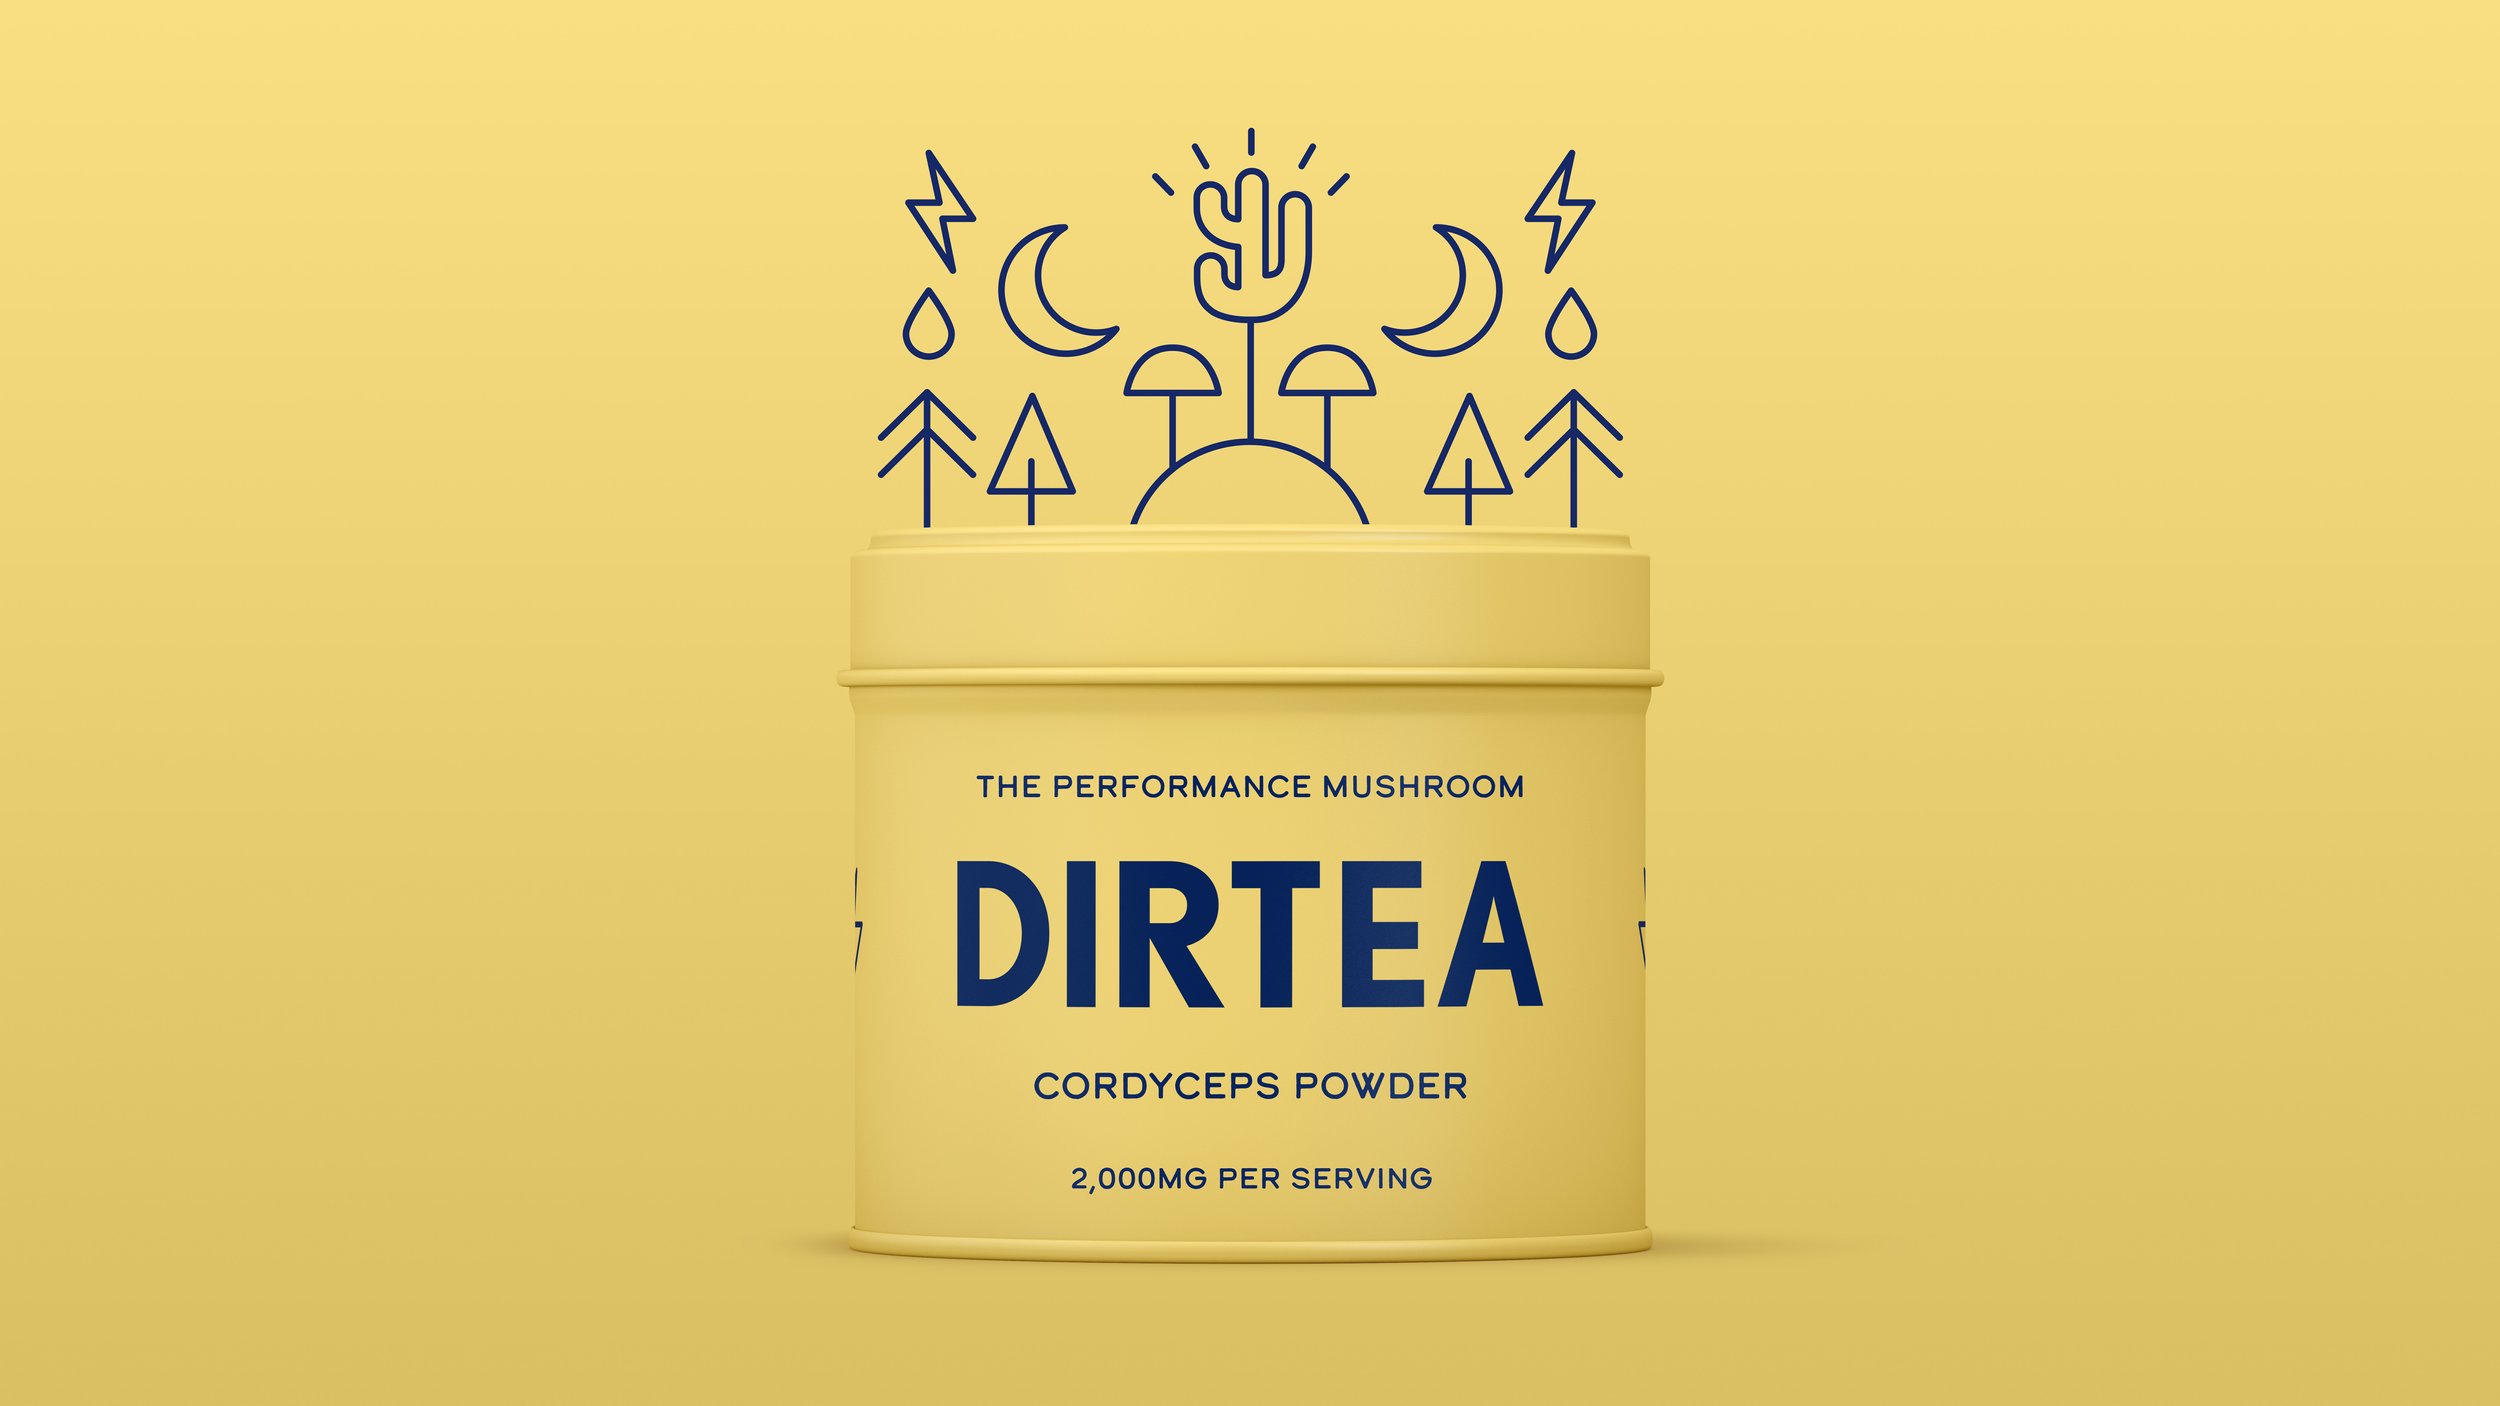 Dirtea brand creation